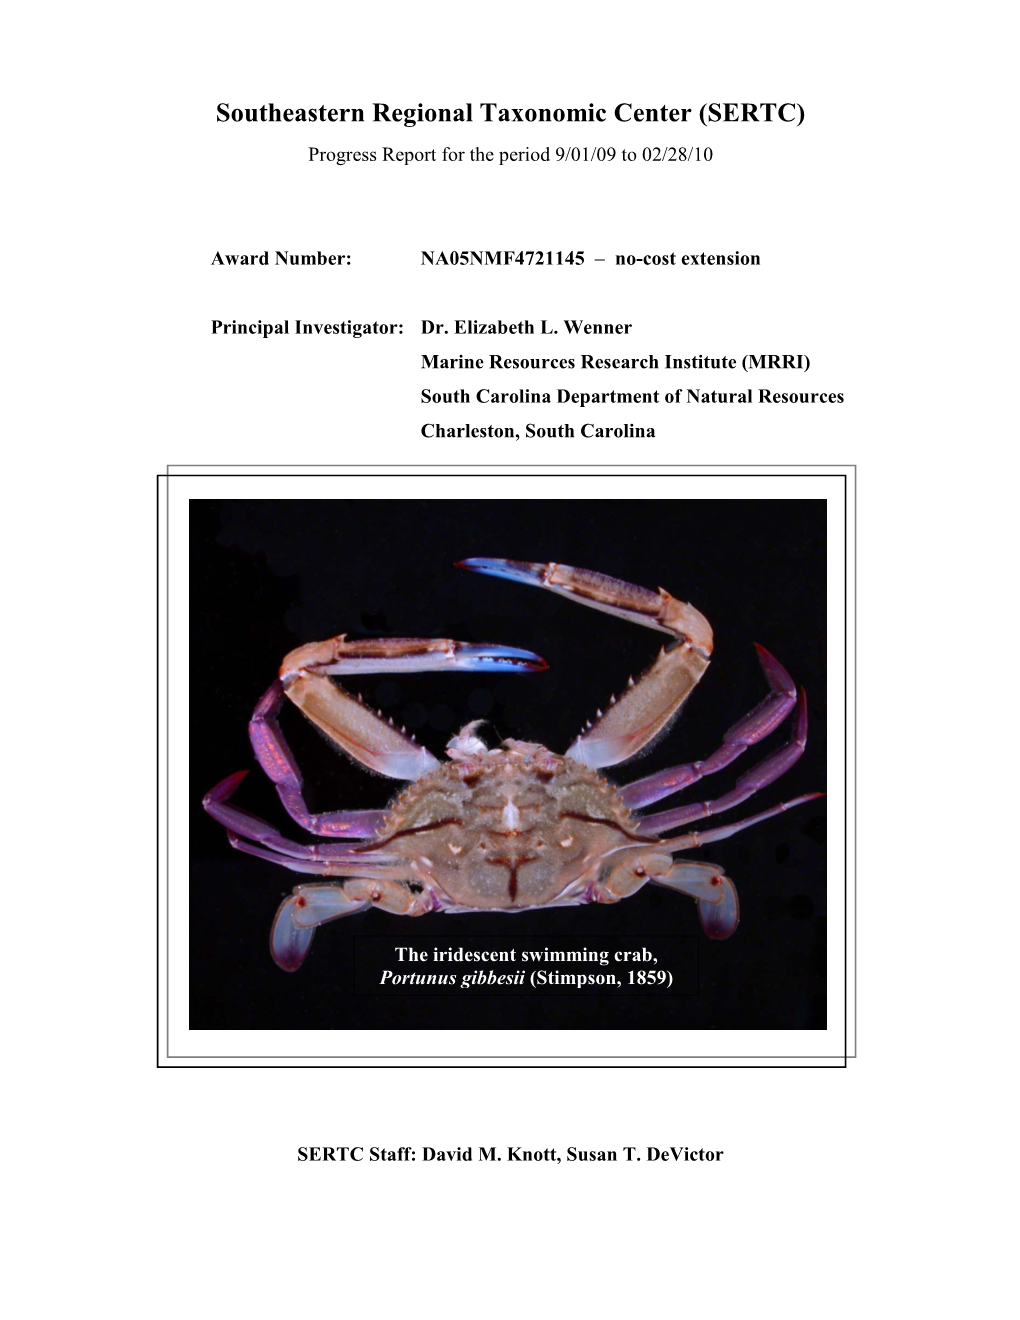 Southeastern Regional Taxonomic Center (SERTC) Progress Report for the Period 9/01/09 to 02/28/10